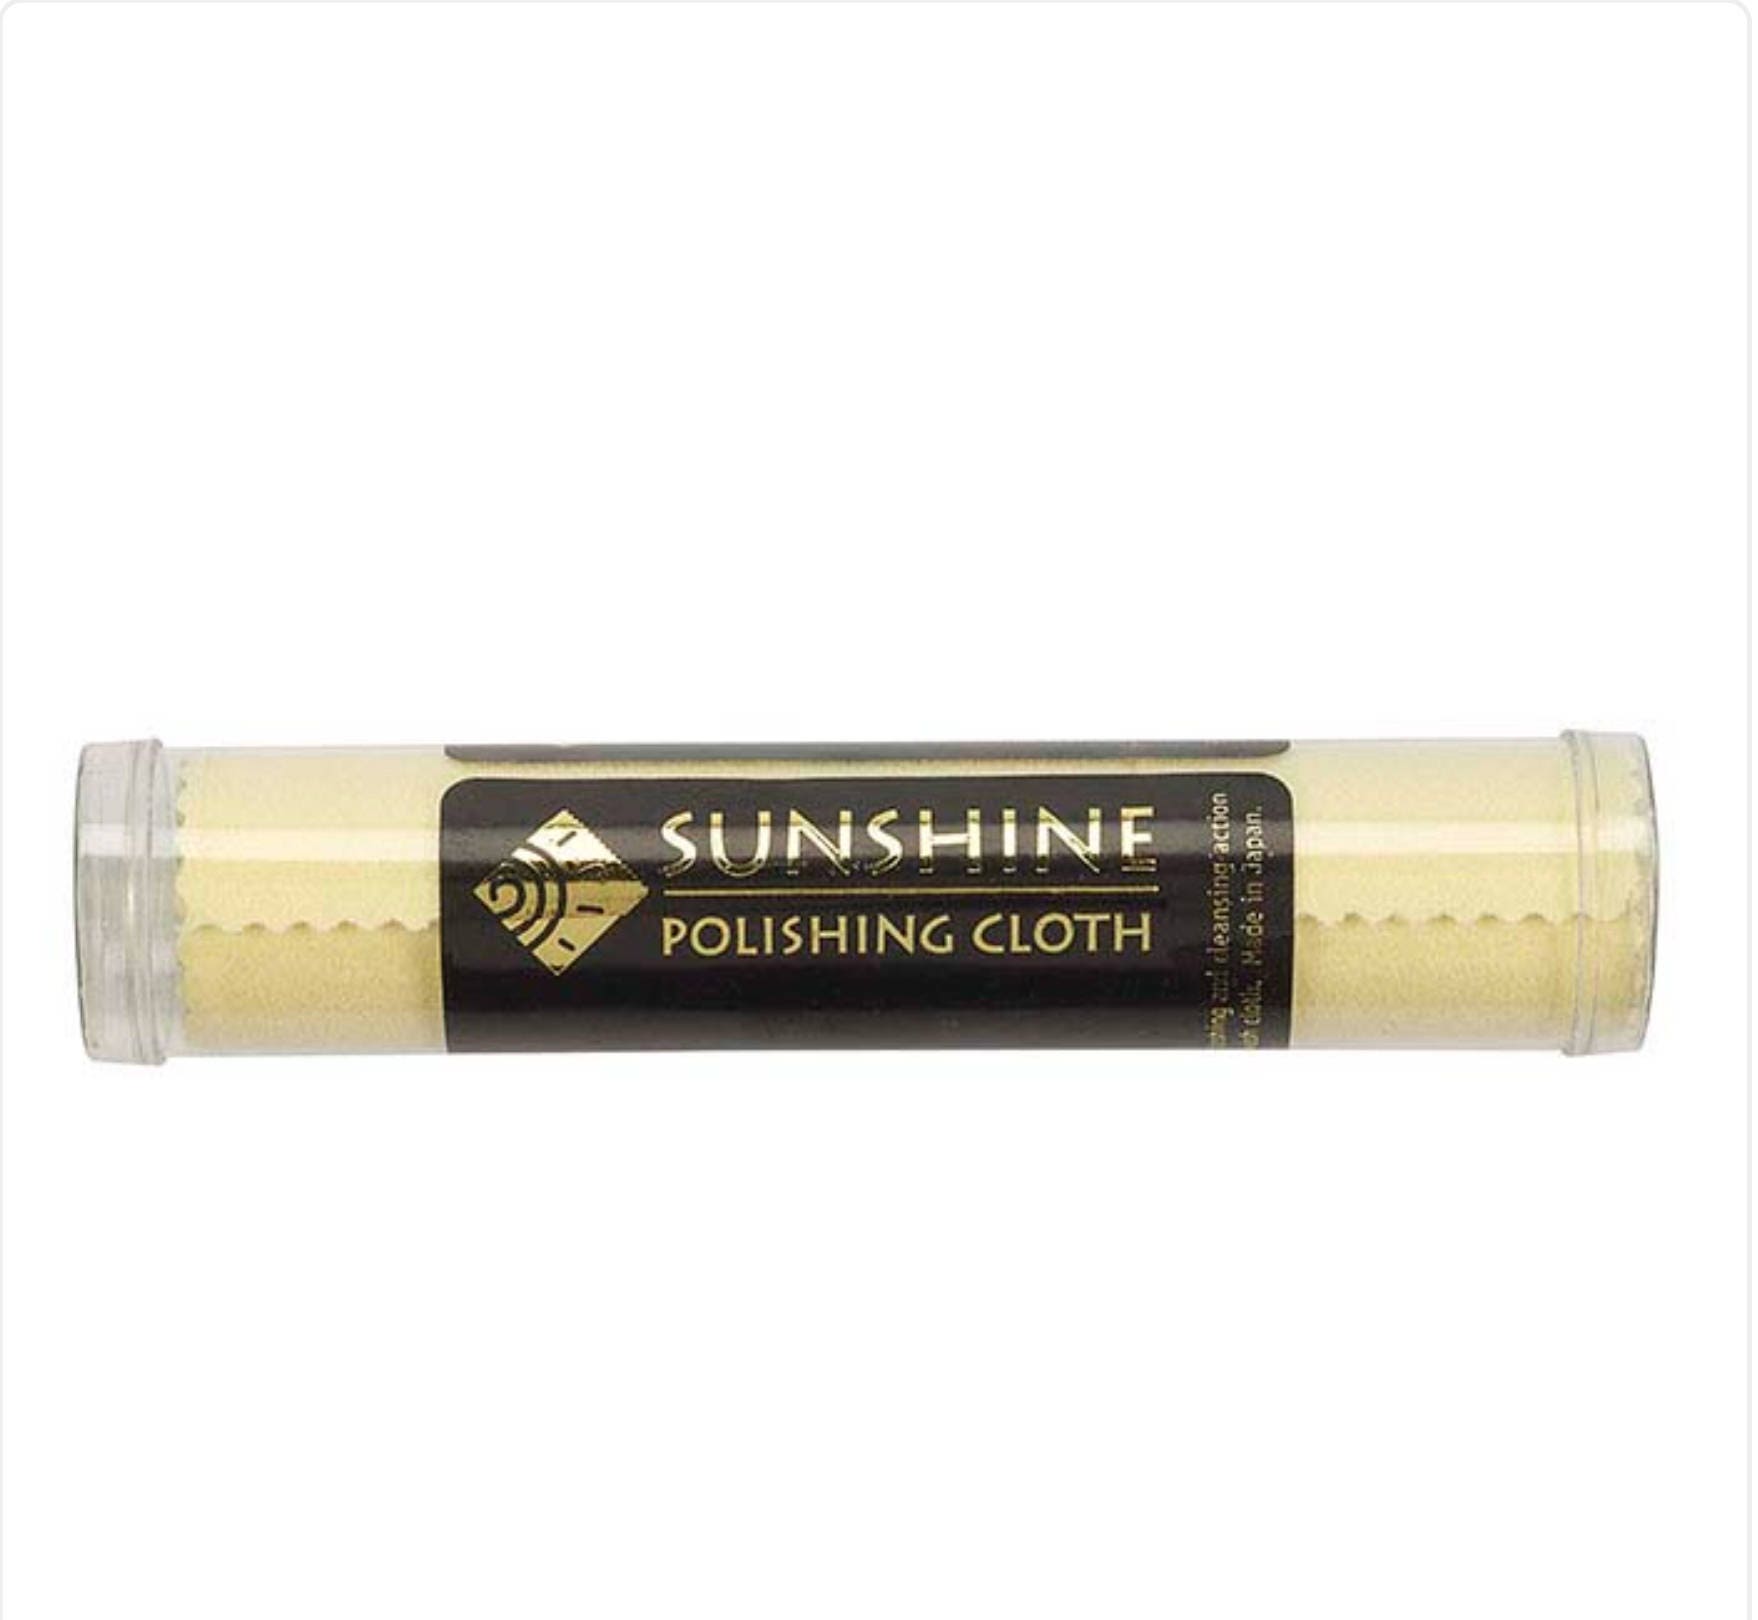 Sunshine® Polishing cloth keeps your backscratcher shining bright